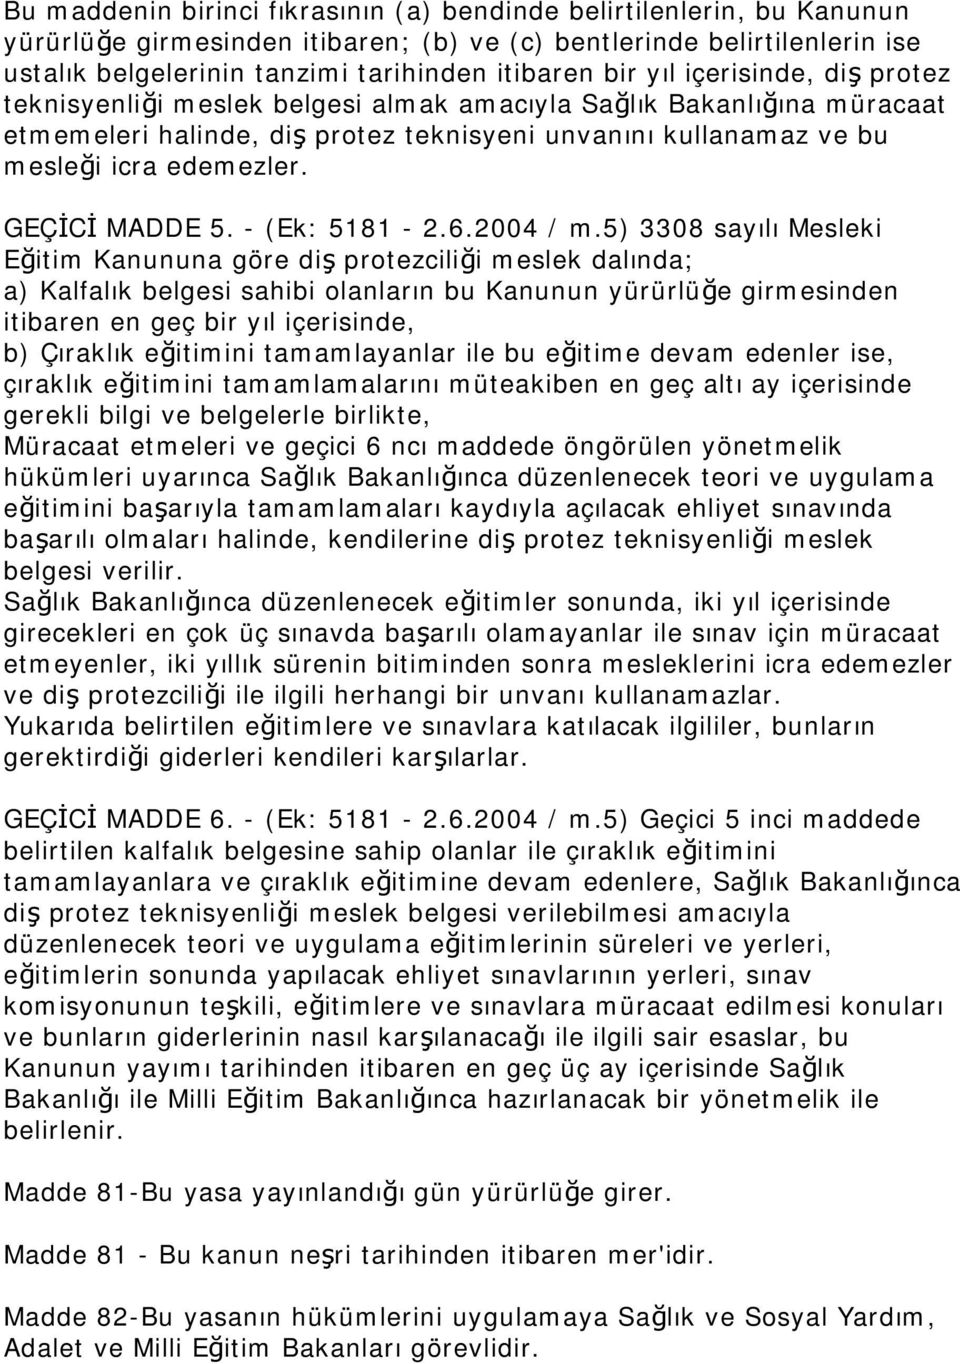 GEÇİCİ MADDE 5. - (Ek: 5181-2.6.2004 / m.